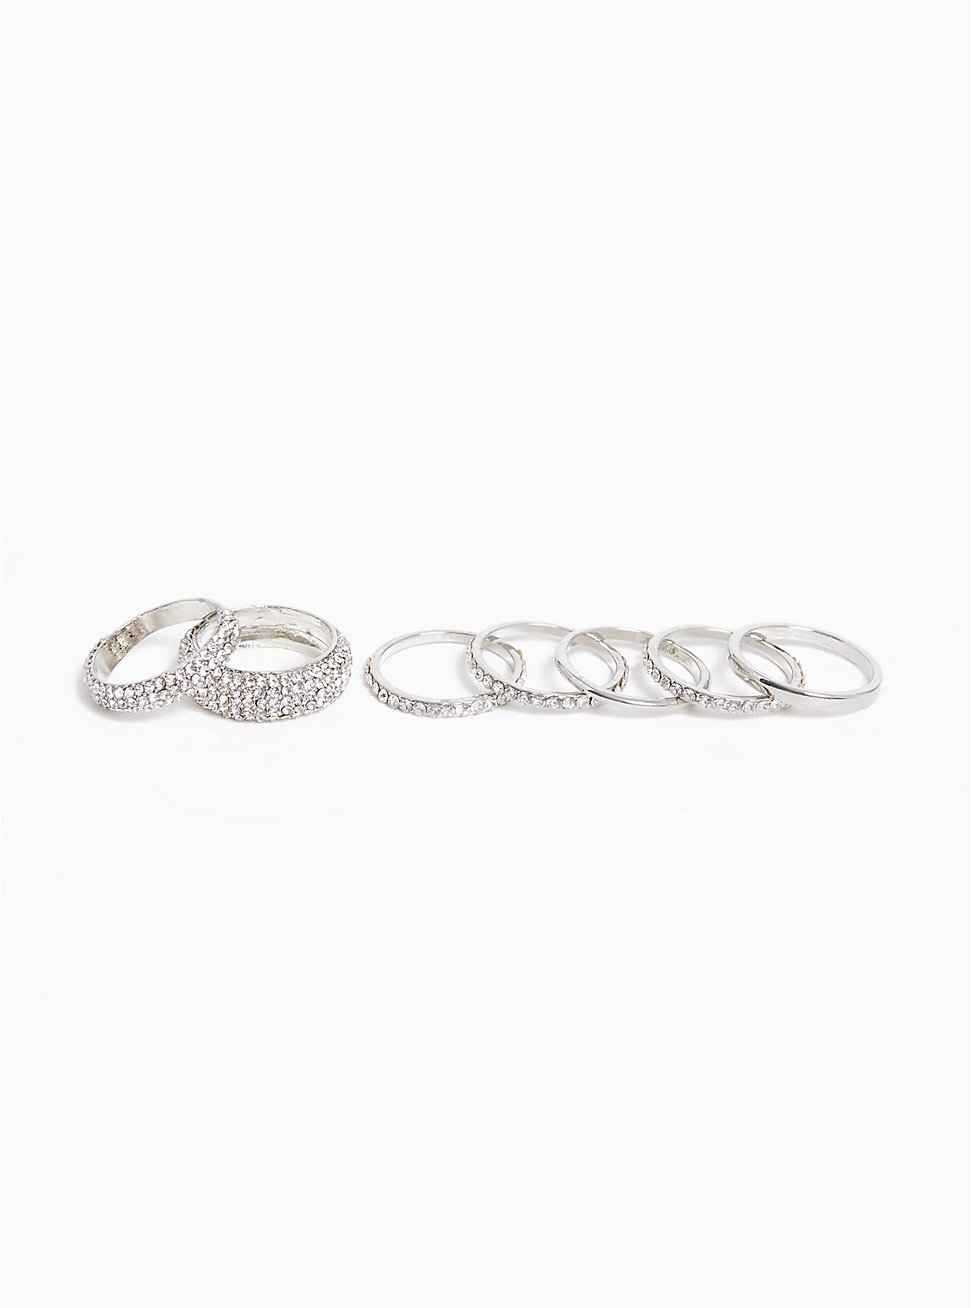 Plus Size Stackable Silver Pavé Rings Set of 7 Torrid